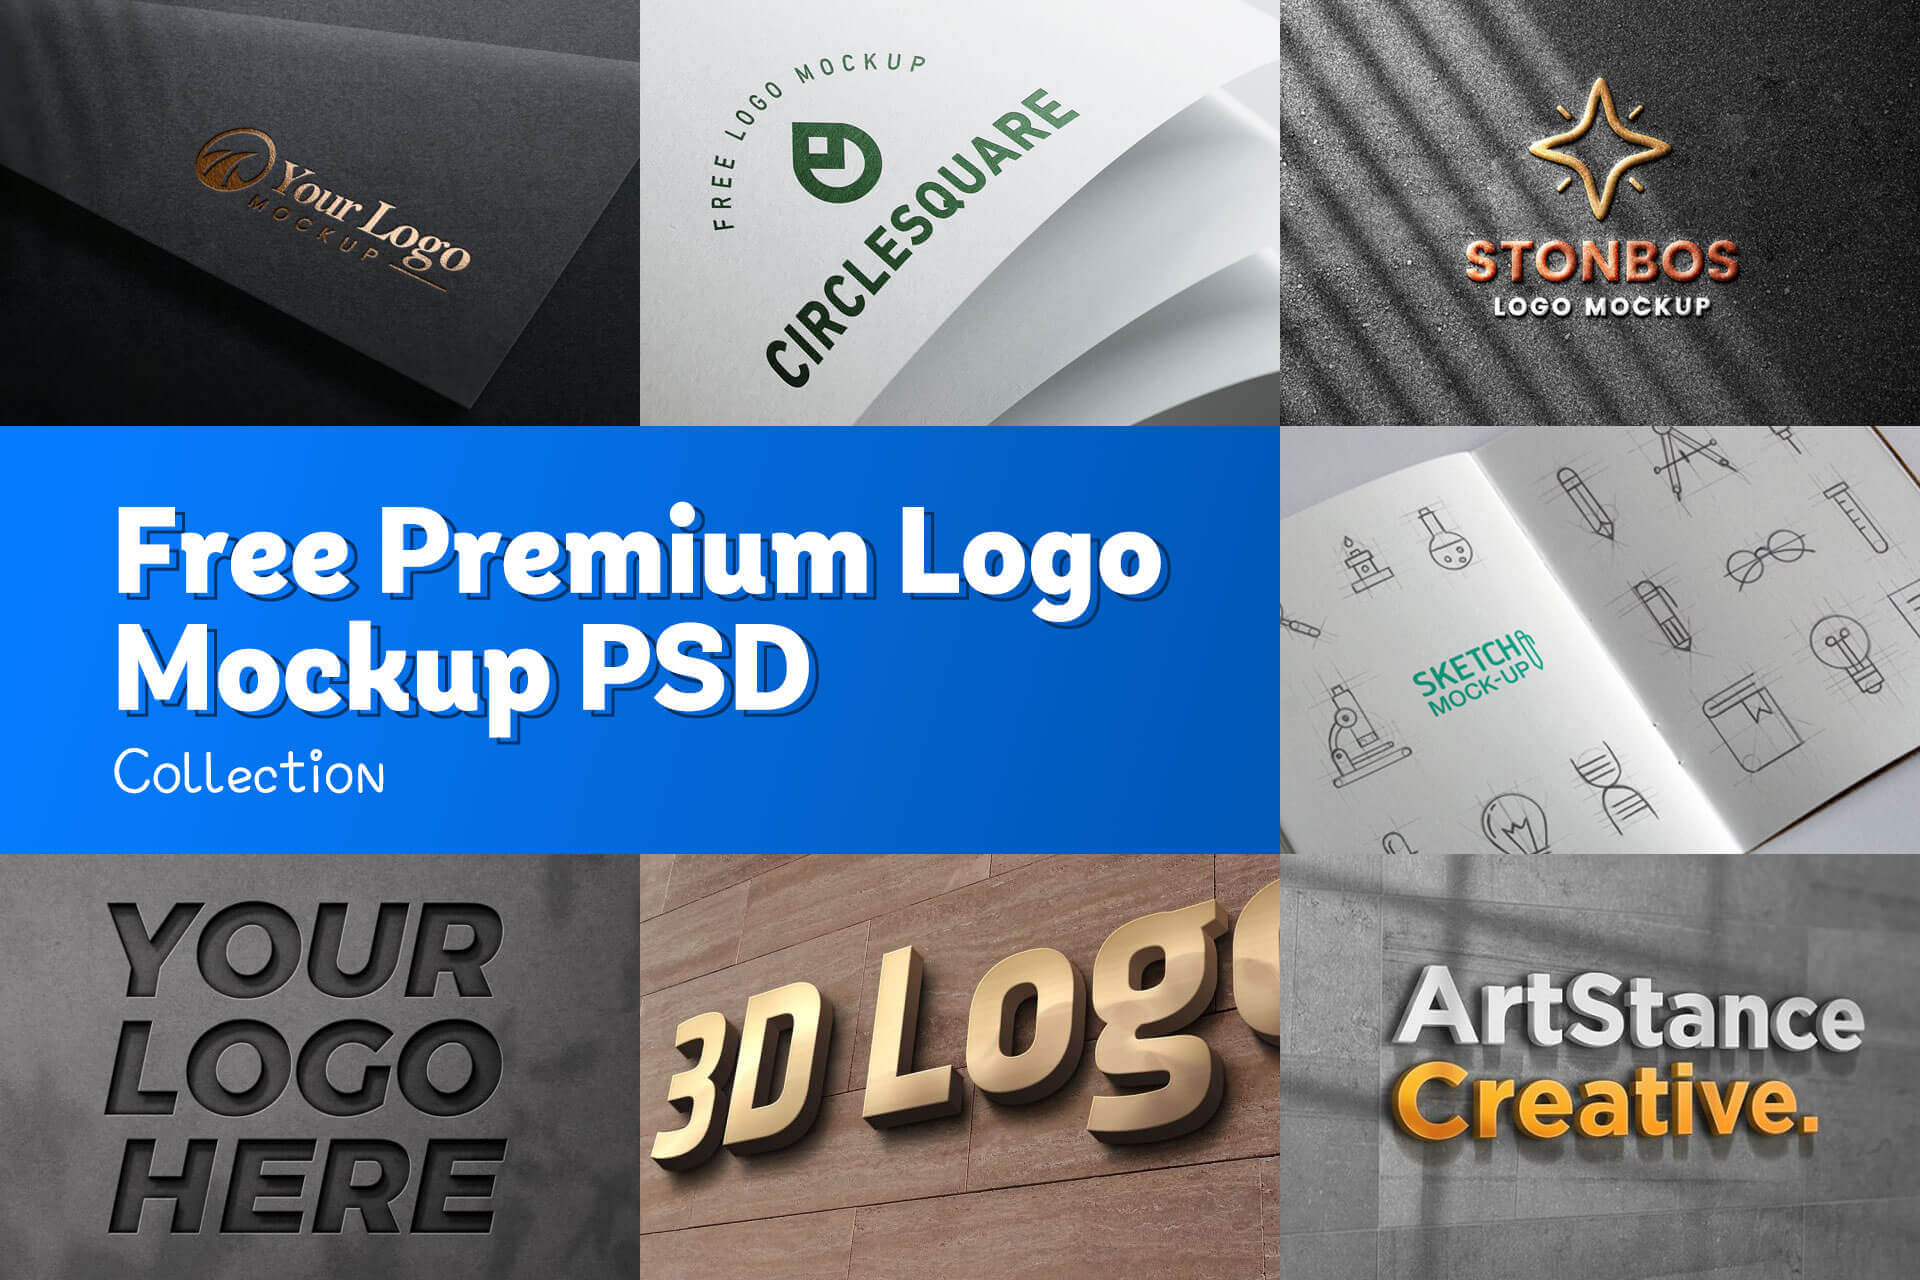 Download Free Premium Logo Mockup PSD Free Download Collection